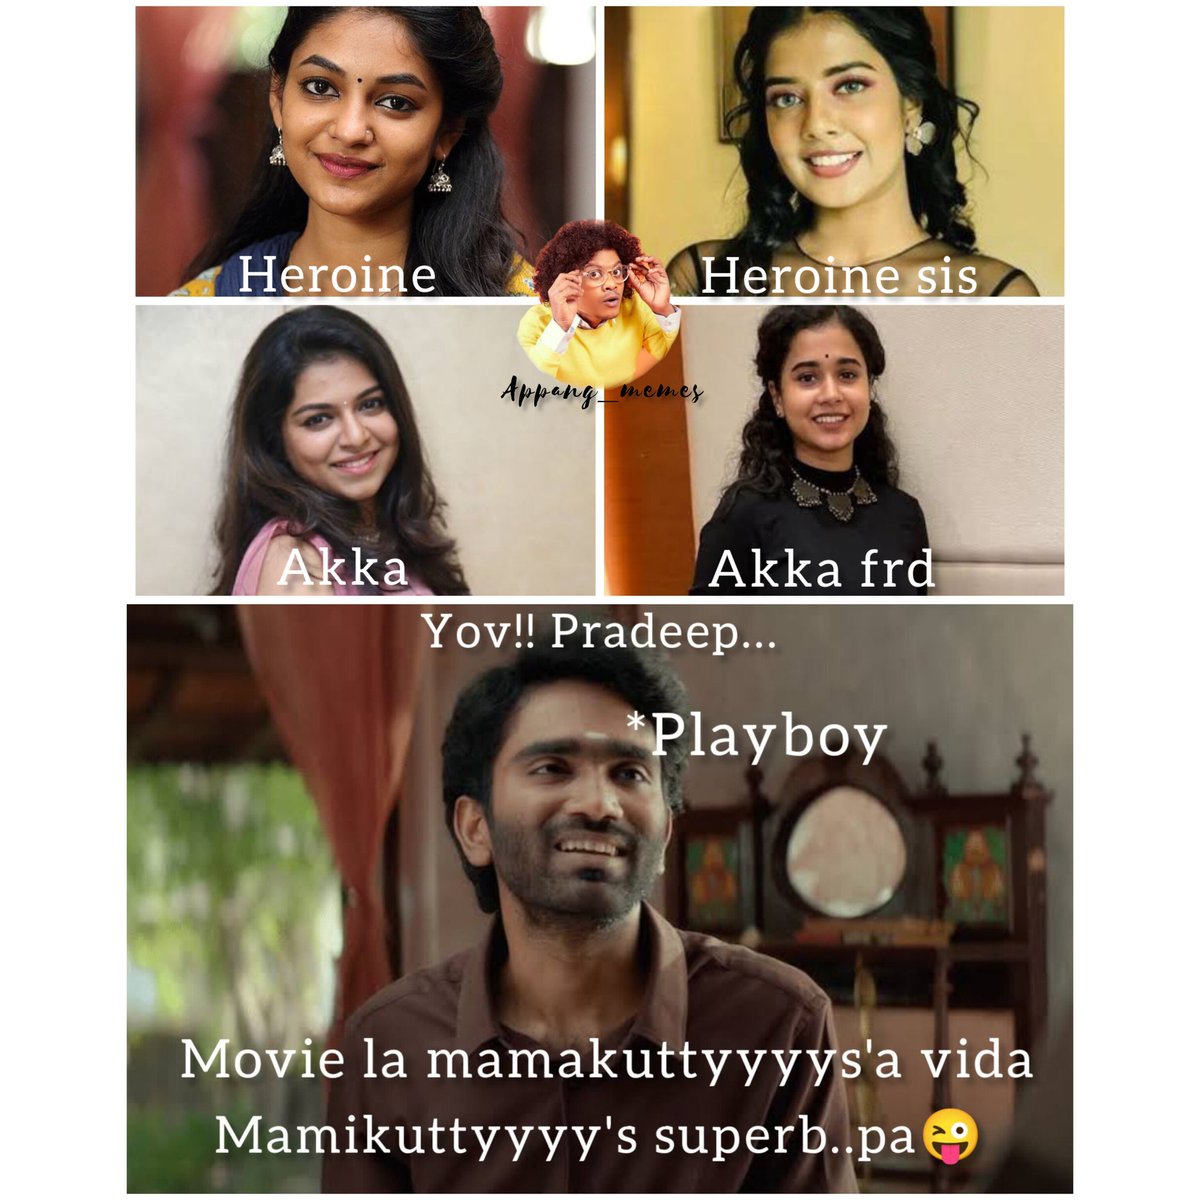 𝘼𝙥𝙥𝙖𝙣𝙜_𝙢𝙚𝙢𝙚𝙨 love today movie actress ♥️
𝙁𝙤𝙡𝙡𝙤𝙬 𝙖𝙣𝙙 𝙨𝙪𝙥𝙥𝙤𝙧𝙩 @appang_memes

#lovetodaymemes #Memes #tamil #tamilmemes #tamilnadumemes #tamilnadumemecreator #memecreator #memecreators #memer #newmemes #newmemeaccount #memesupport #memeshare #TwitterFiles